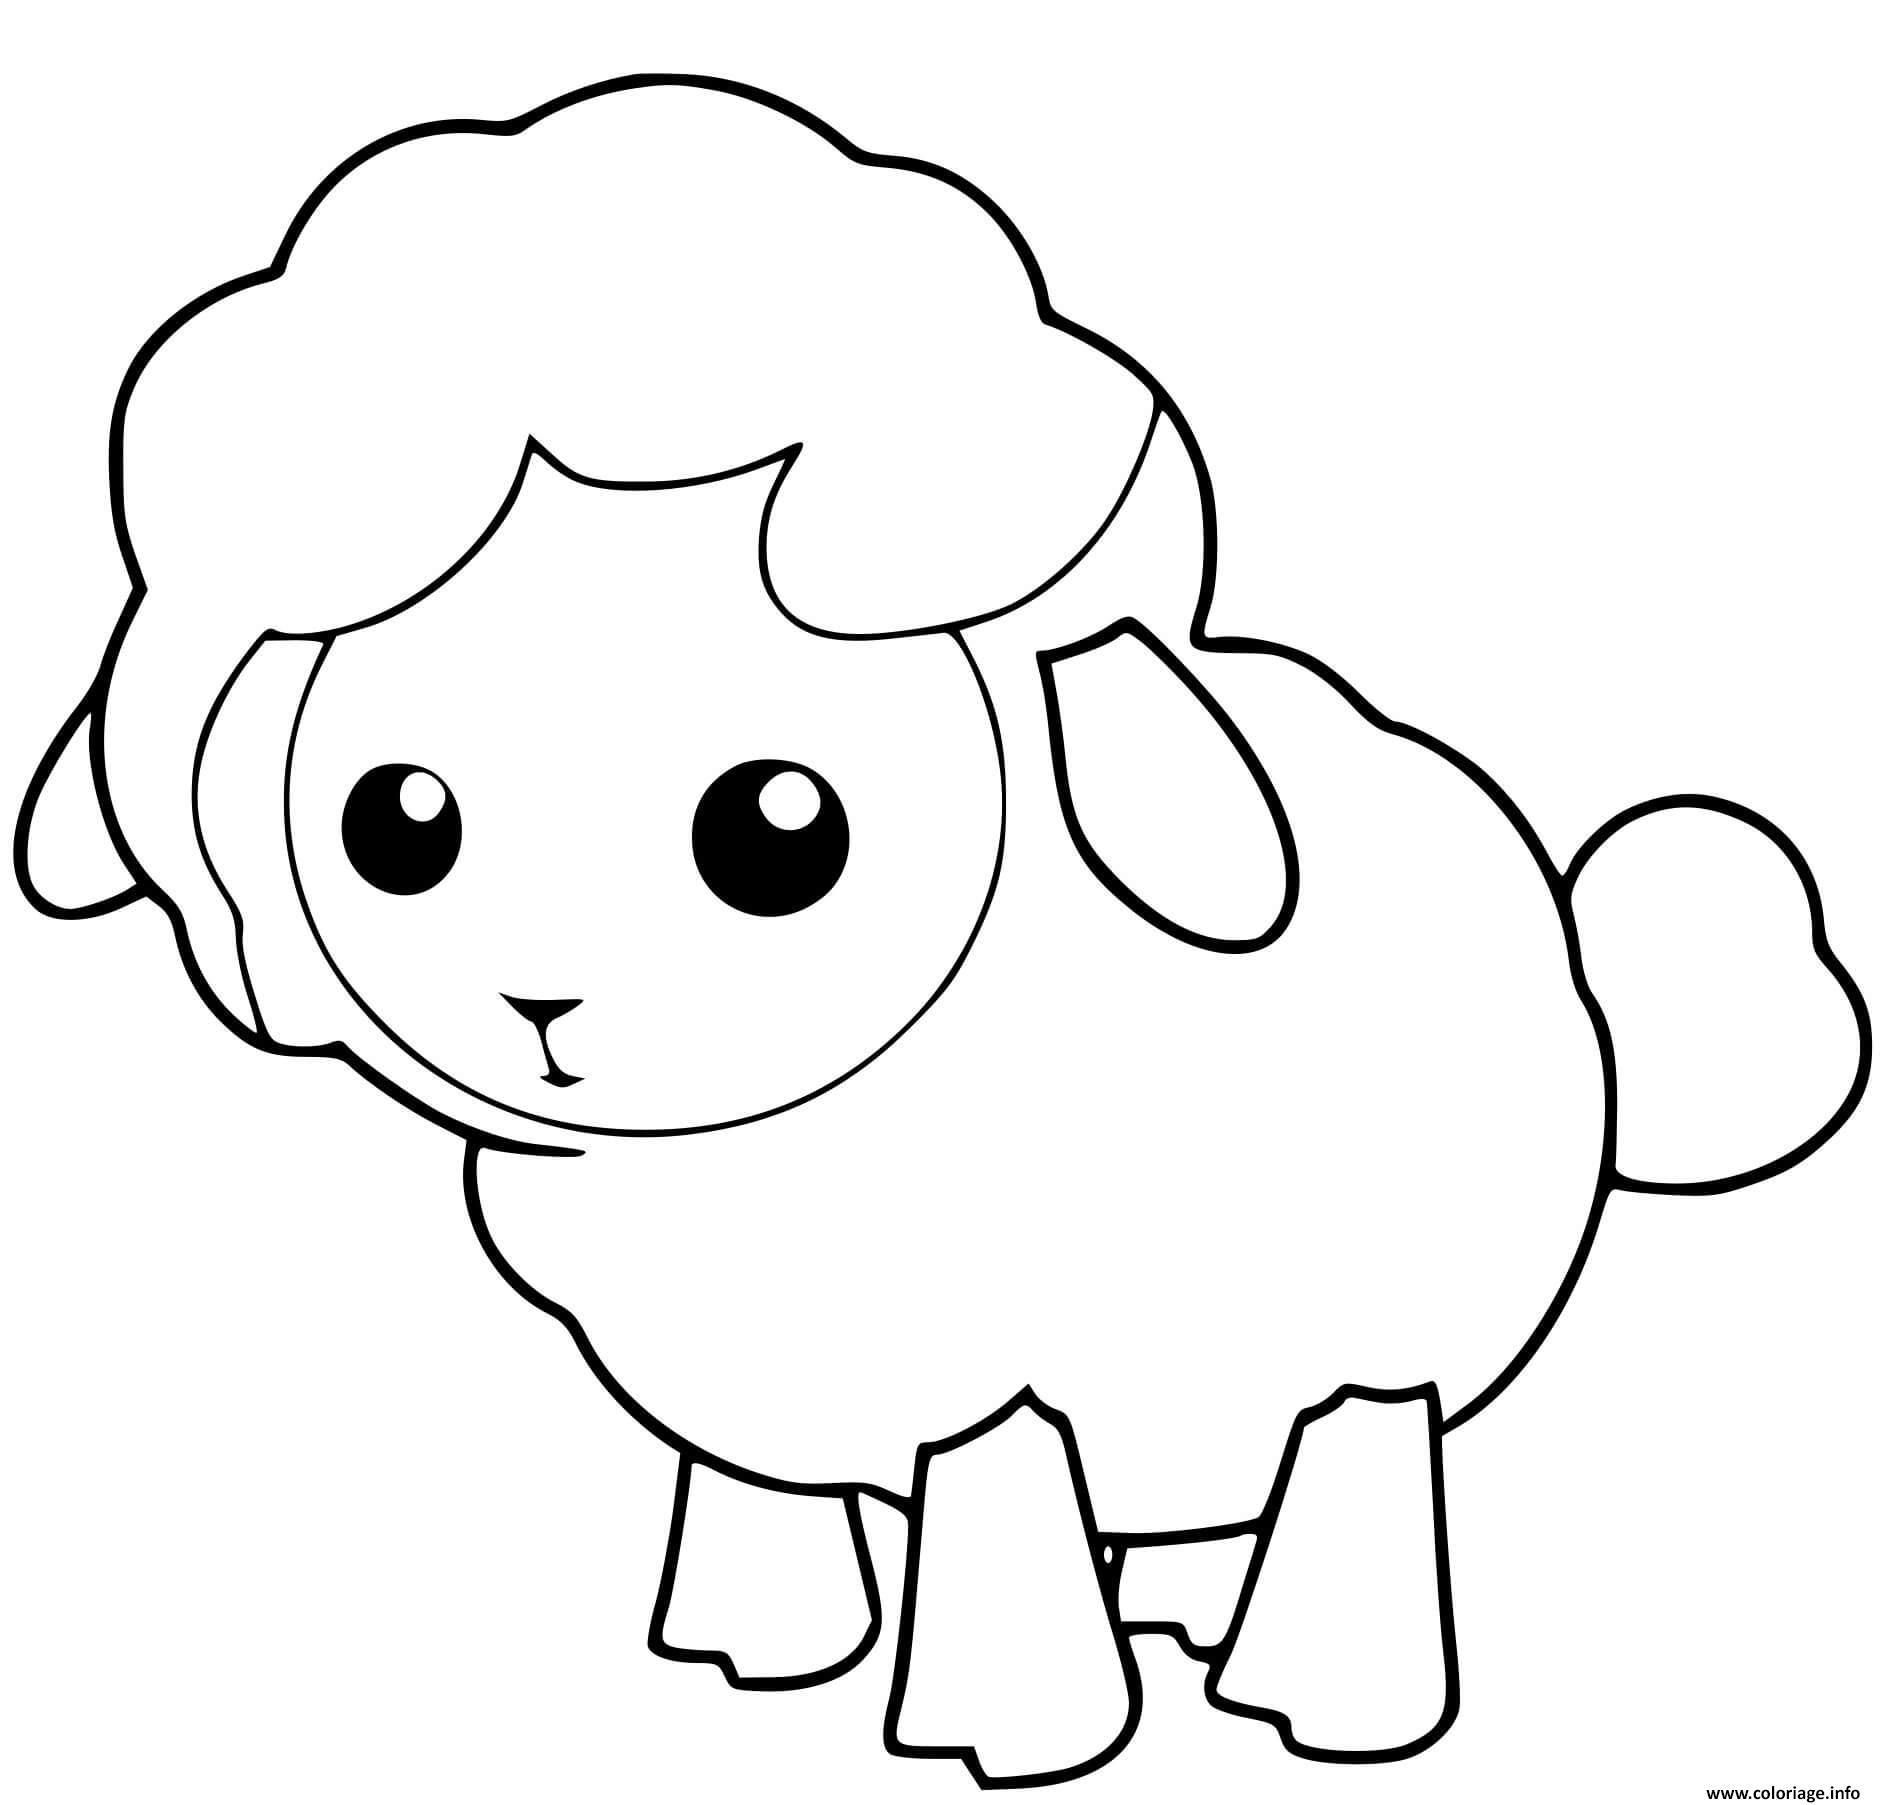 Coloriage mouton agneau petit facile - JeColorie.com